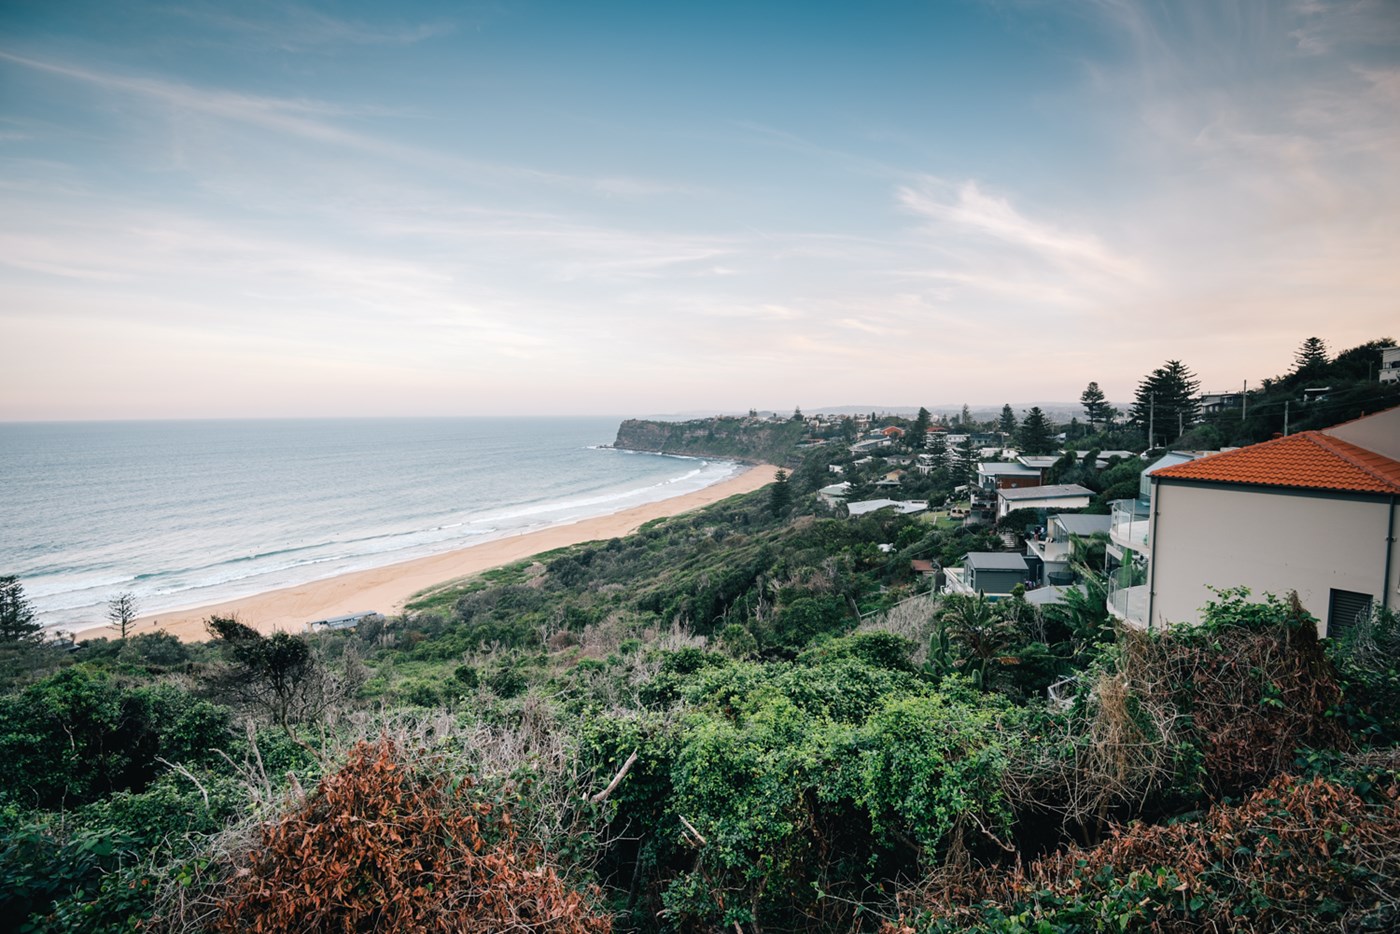 Residential homes overlook the coastline of Bungan Beach. 